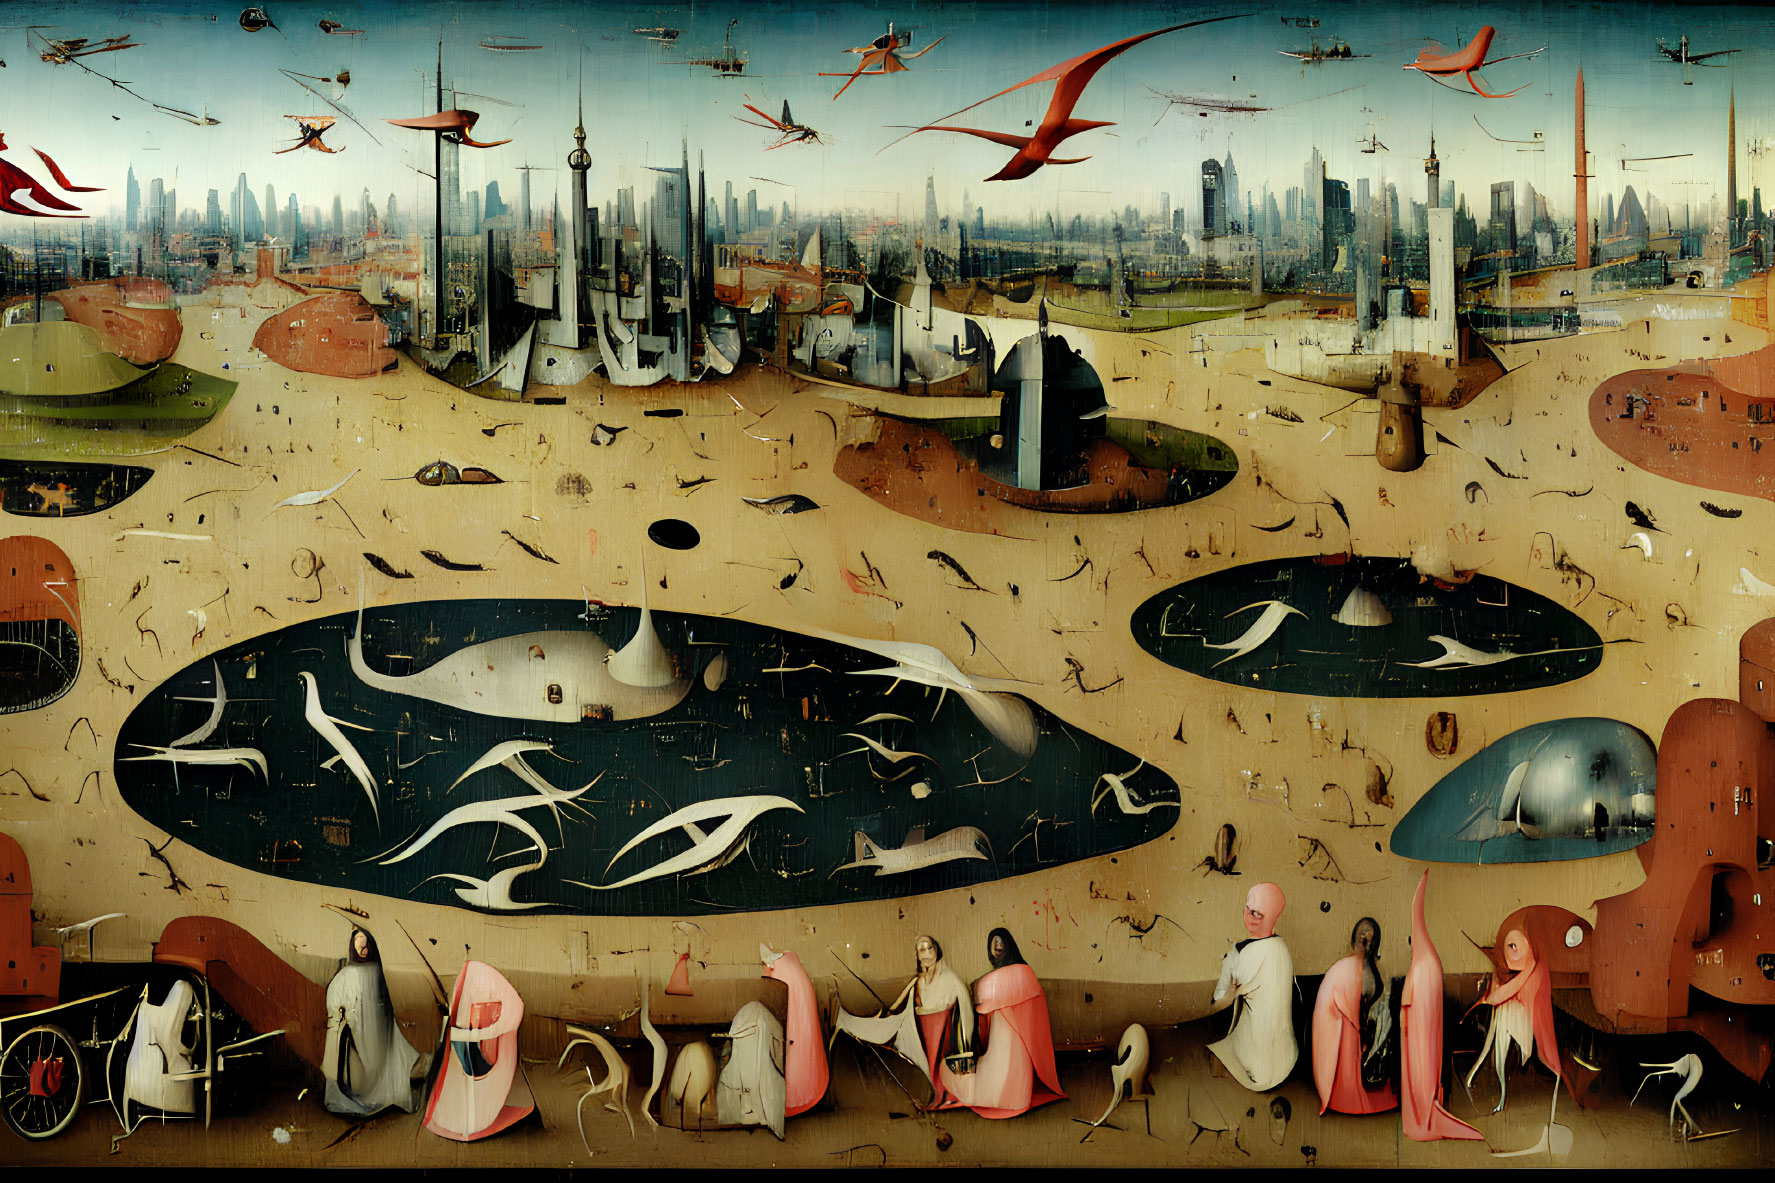 Futuristic surreal painting: dystopian landscape, anthropomorphic figures, fantastical creatures, city sk